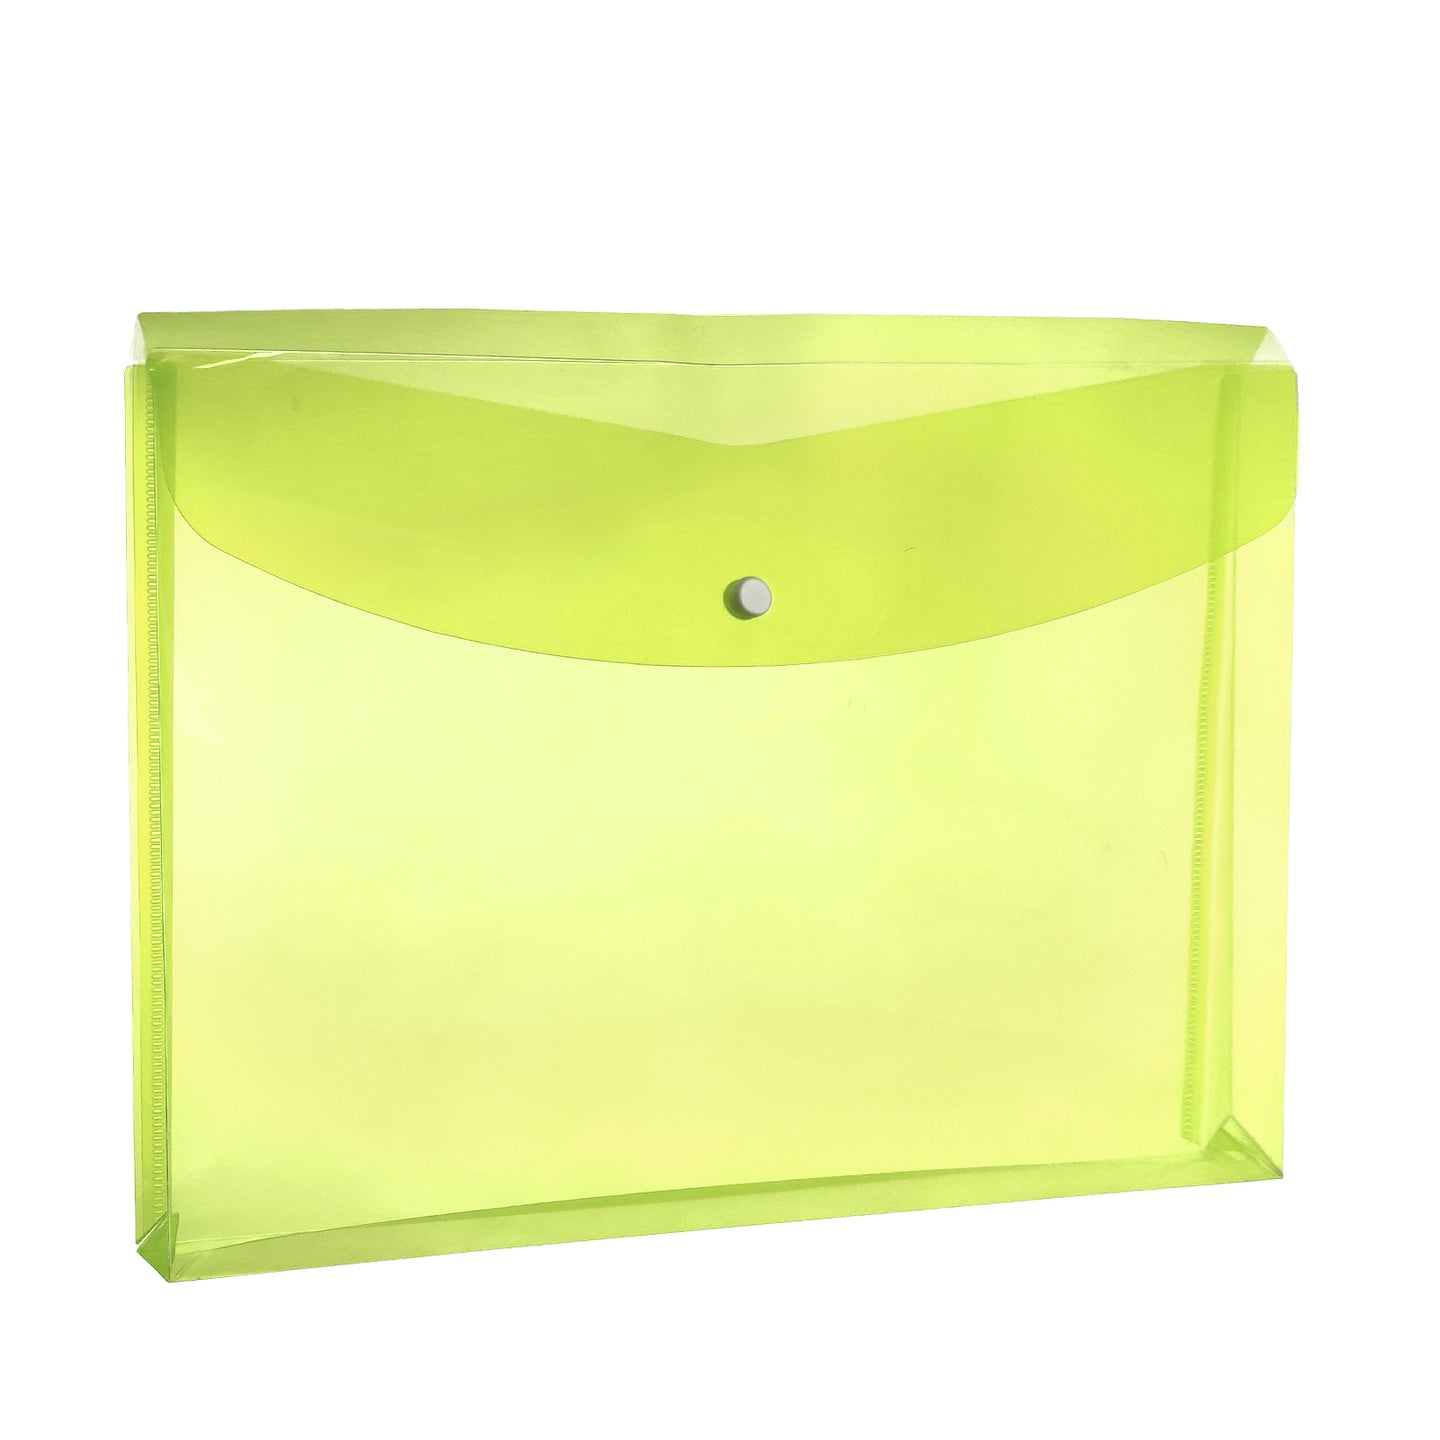 Plastic Envelopes with Snap Closure, Legal Size Expandable Organizition File Folder-Yellow